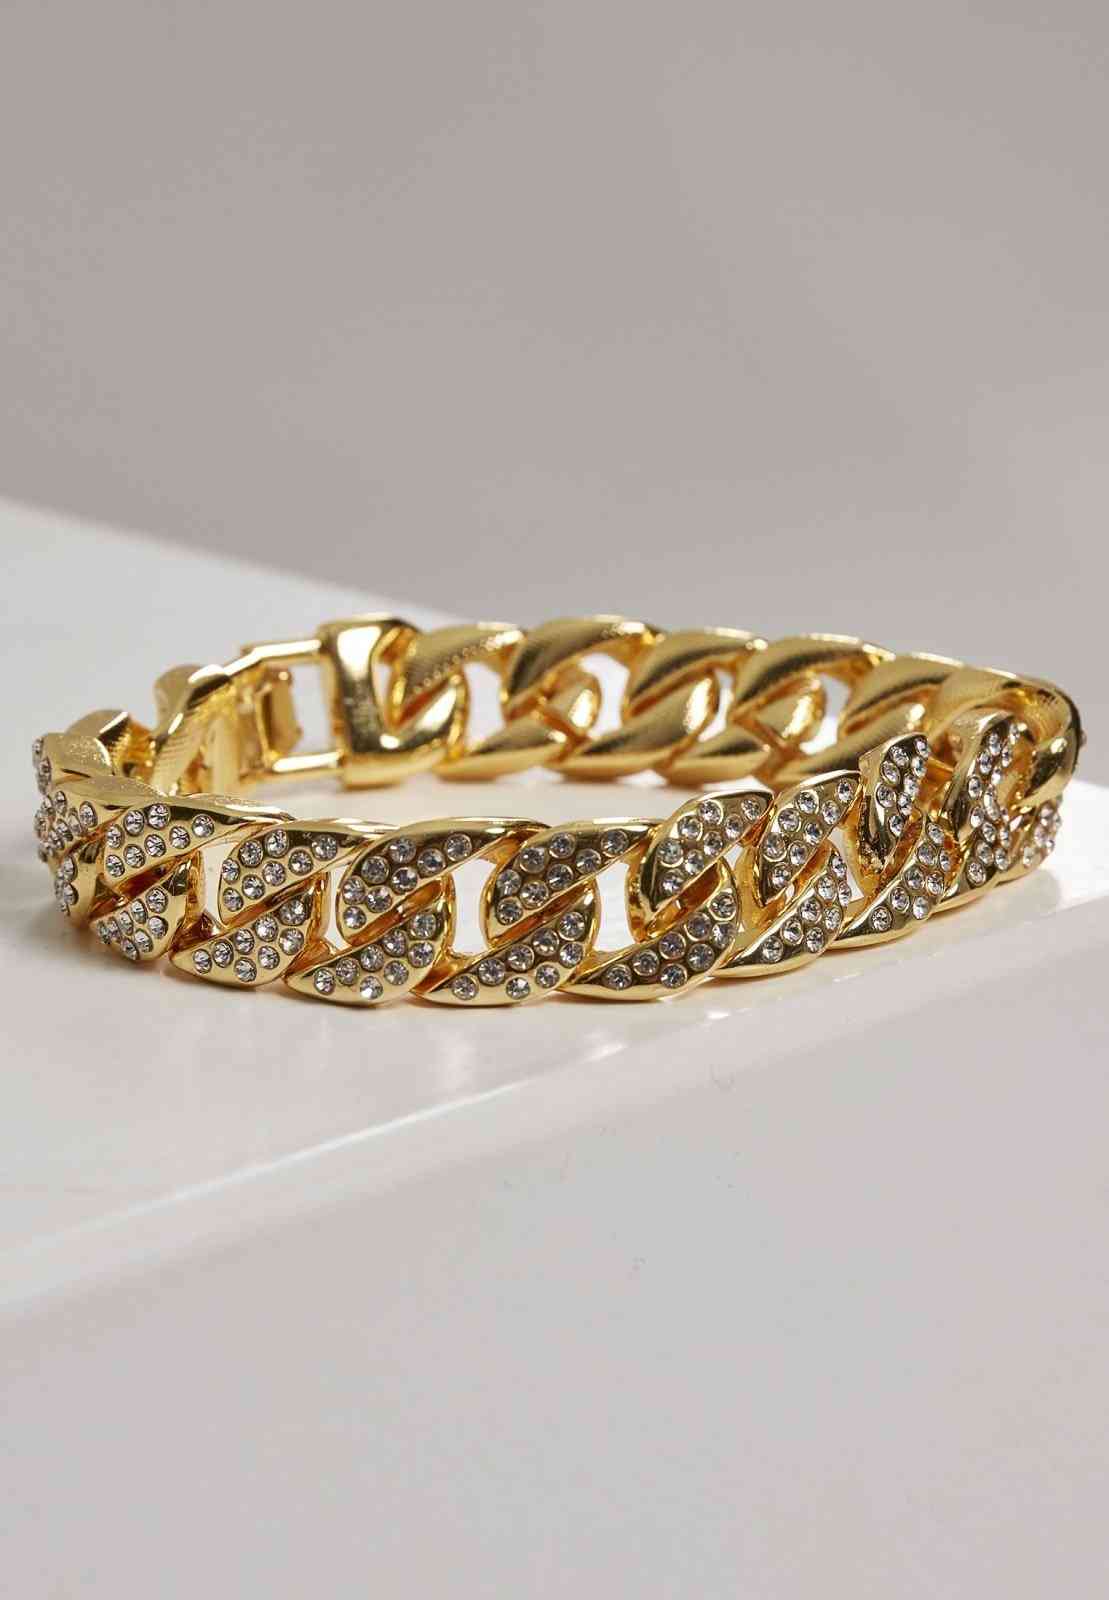 Big Bracelet With Stones - Gold